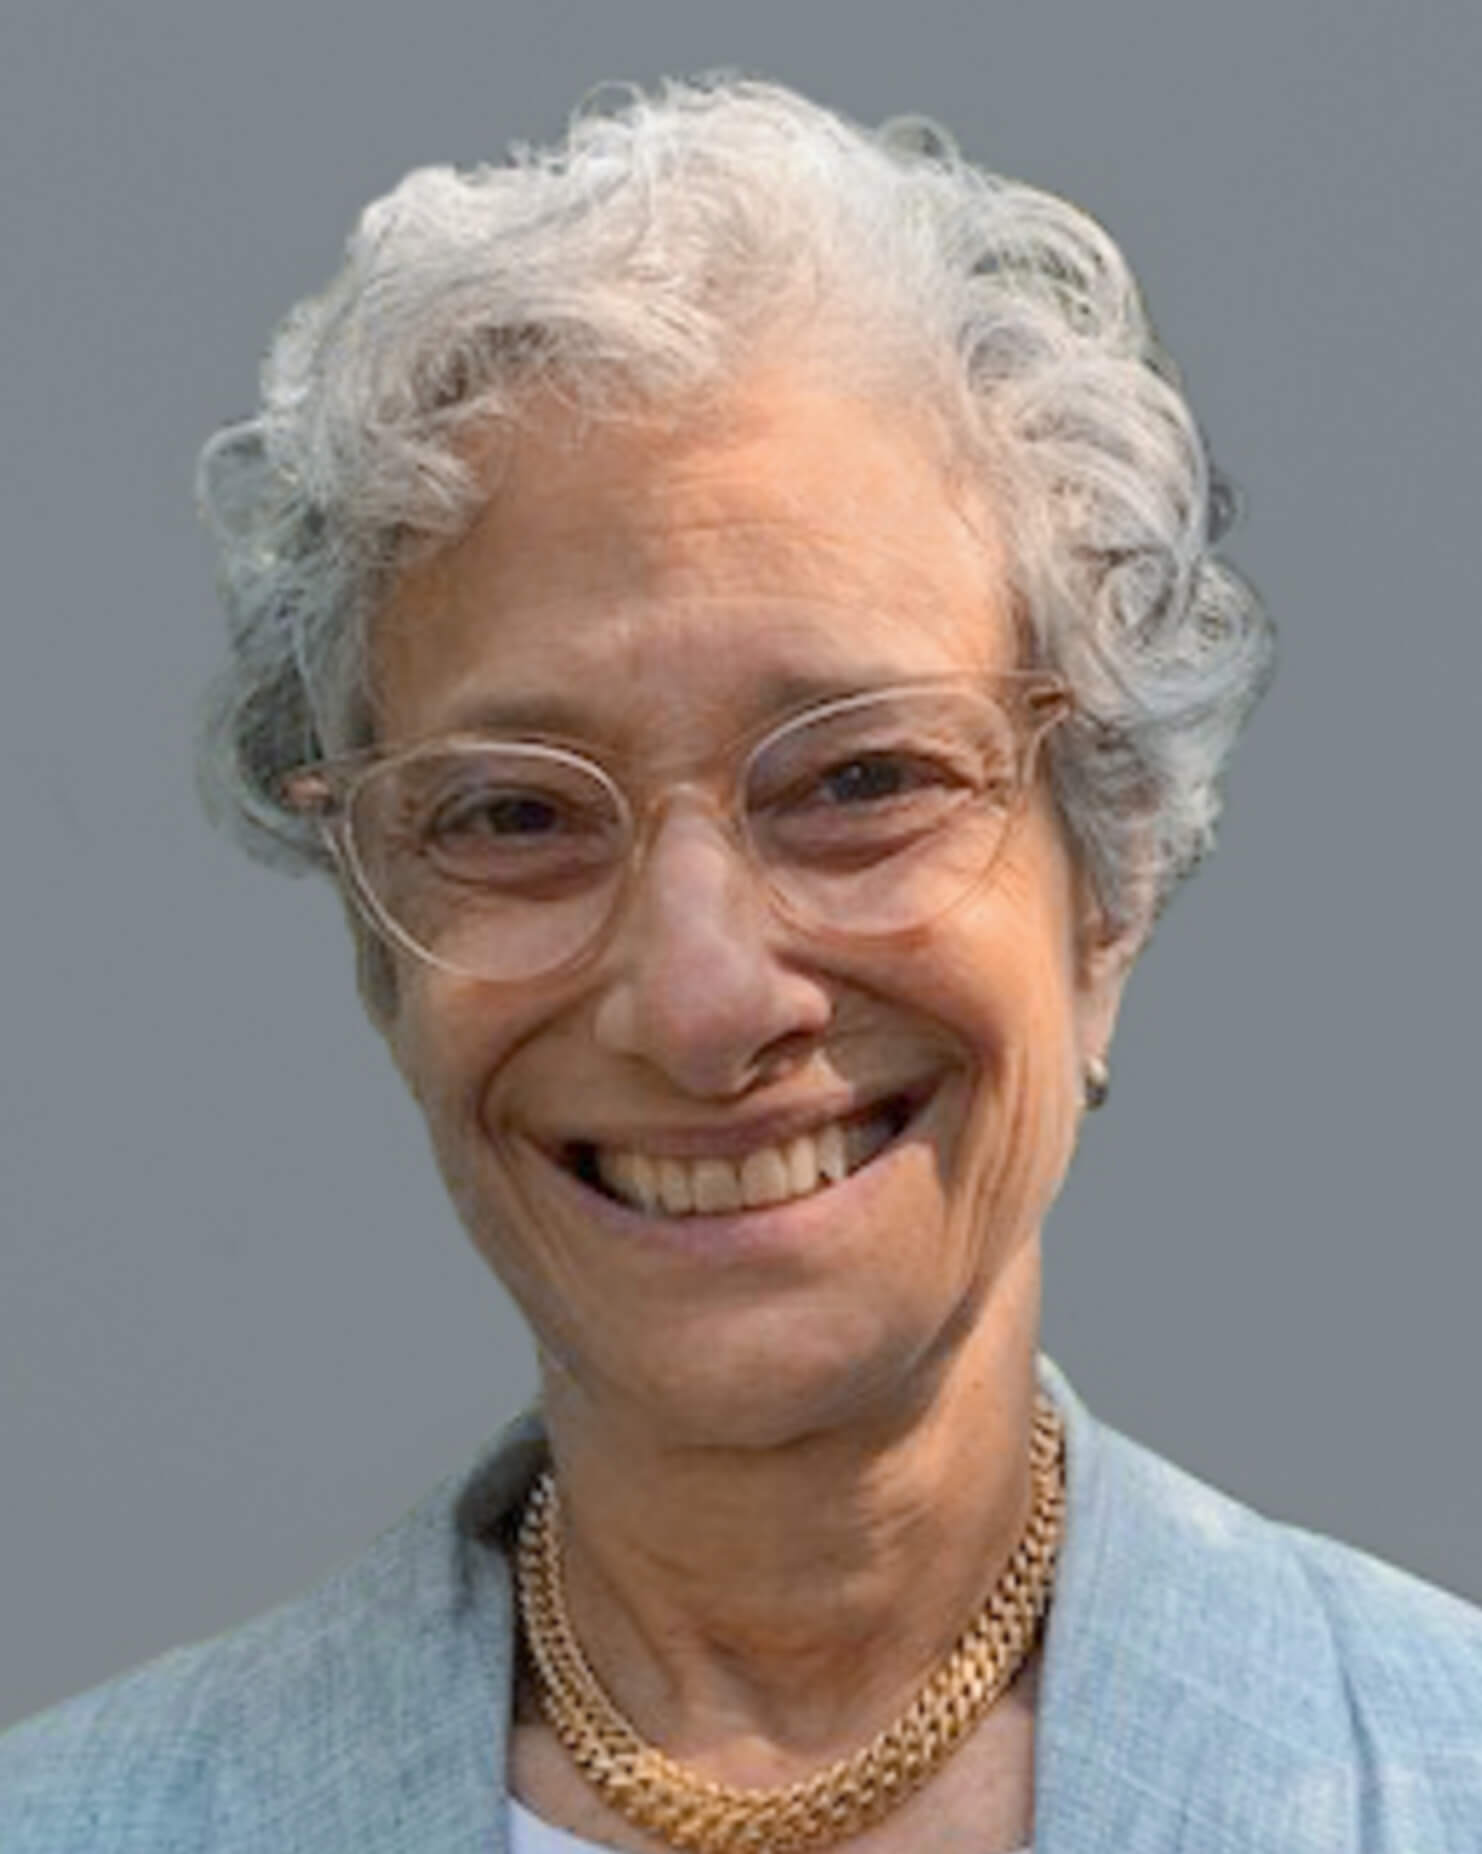 Sharon Segal, Ph.D